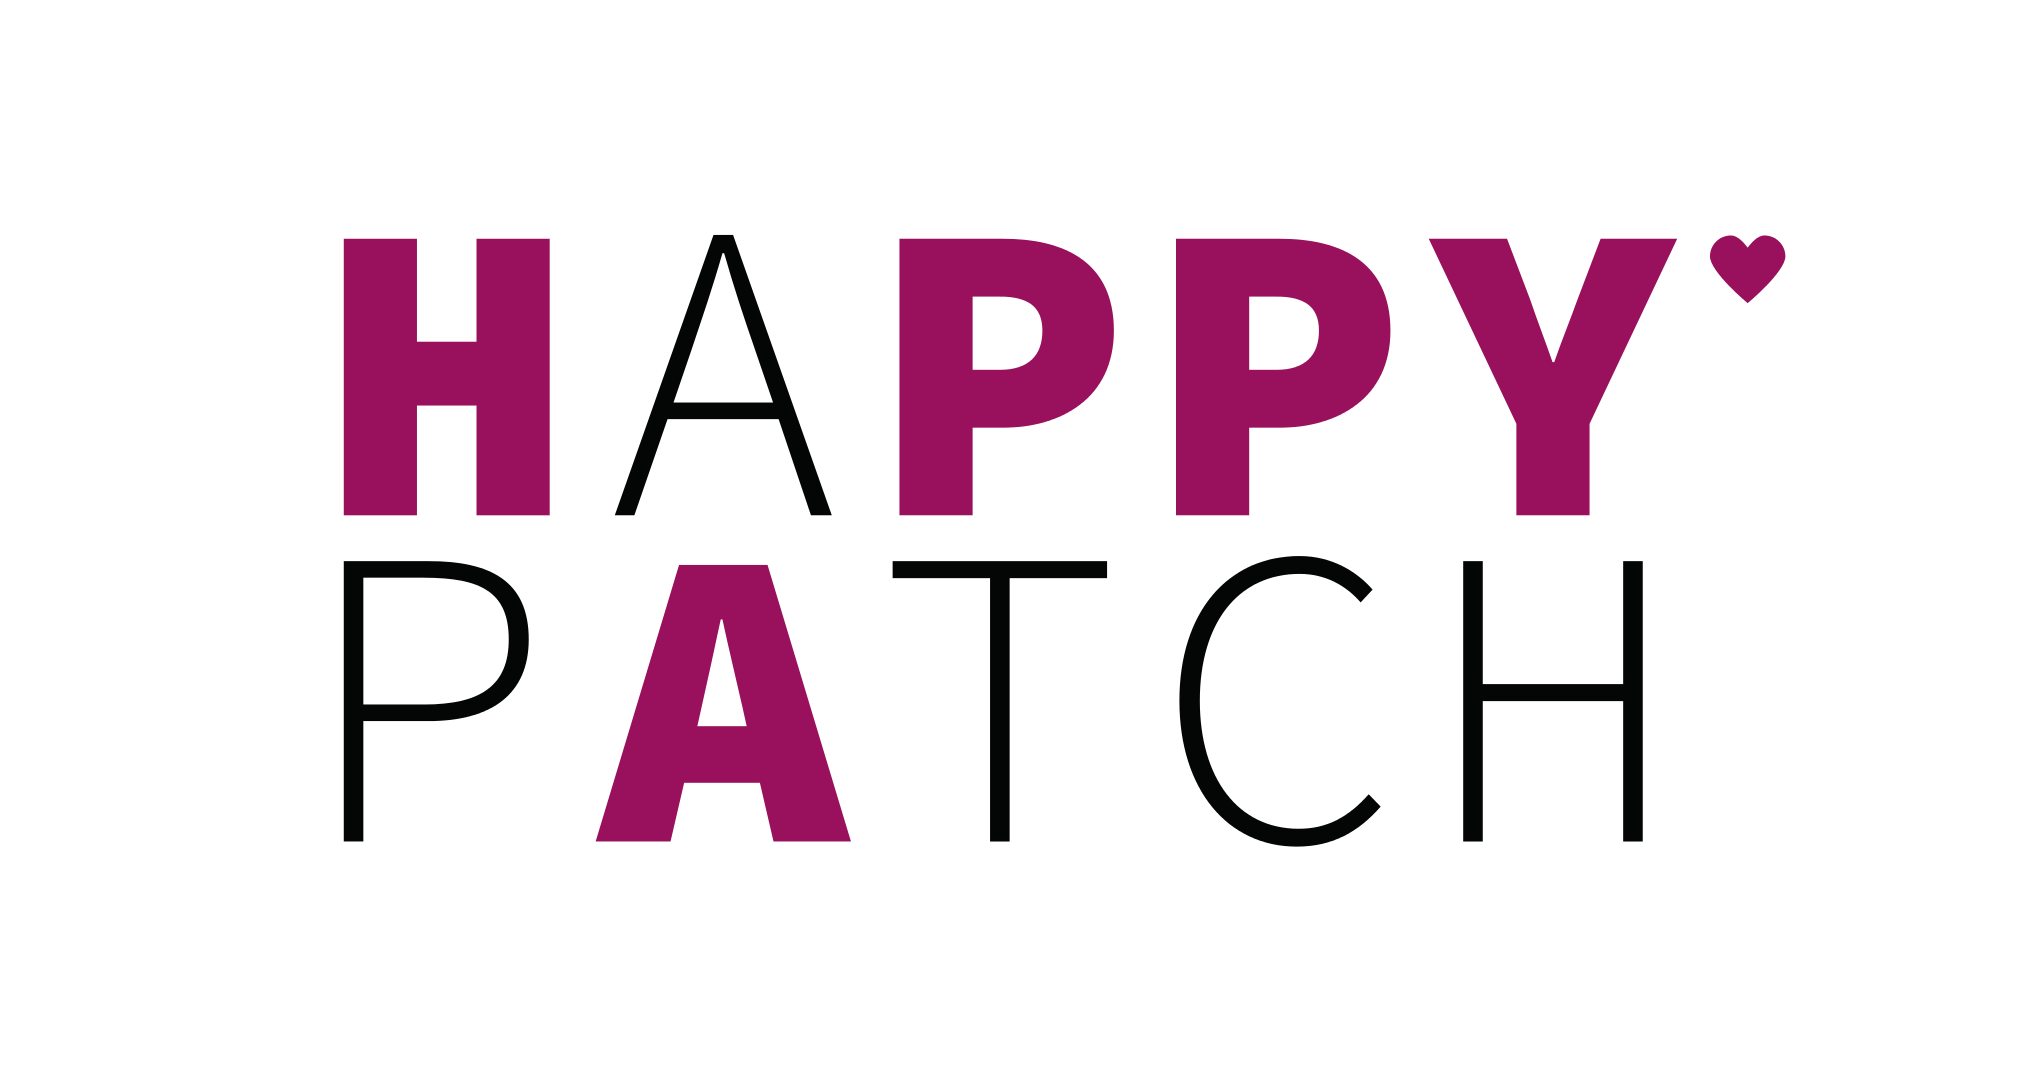 Happypatch